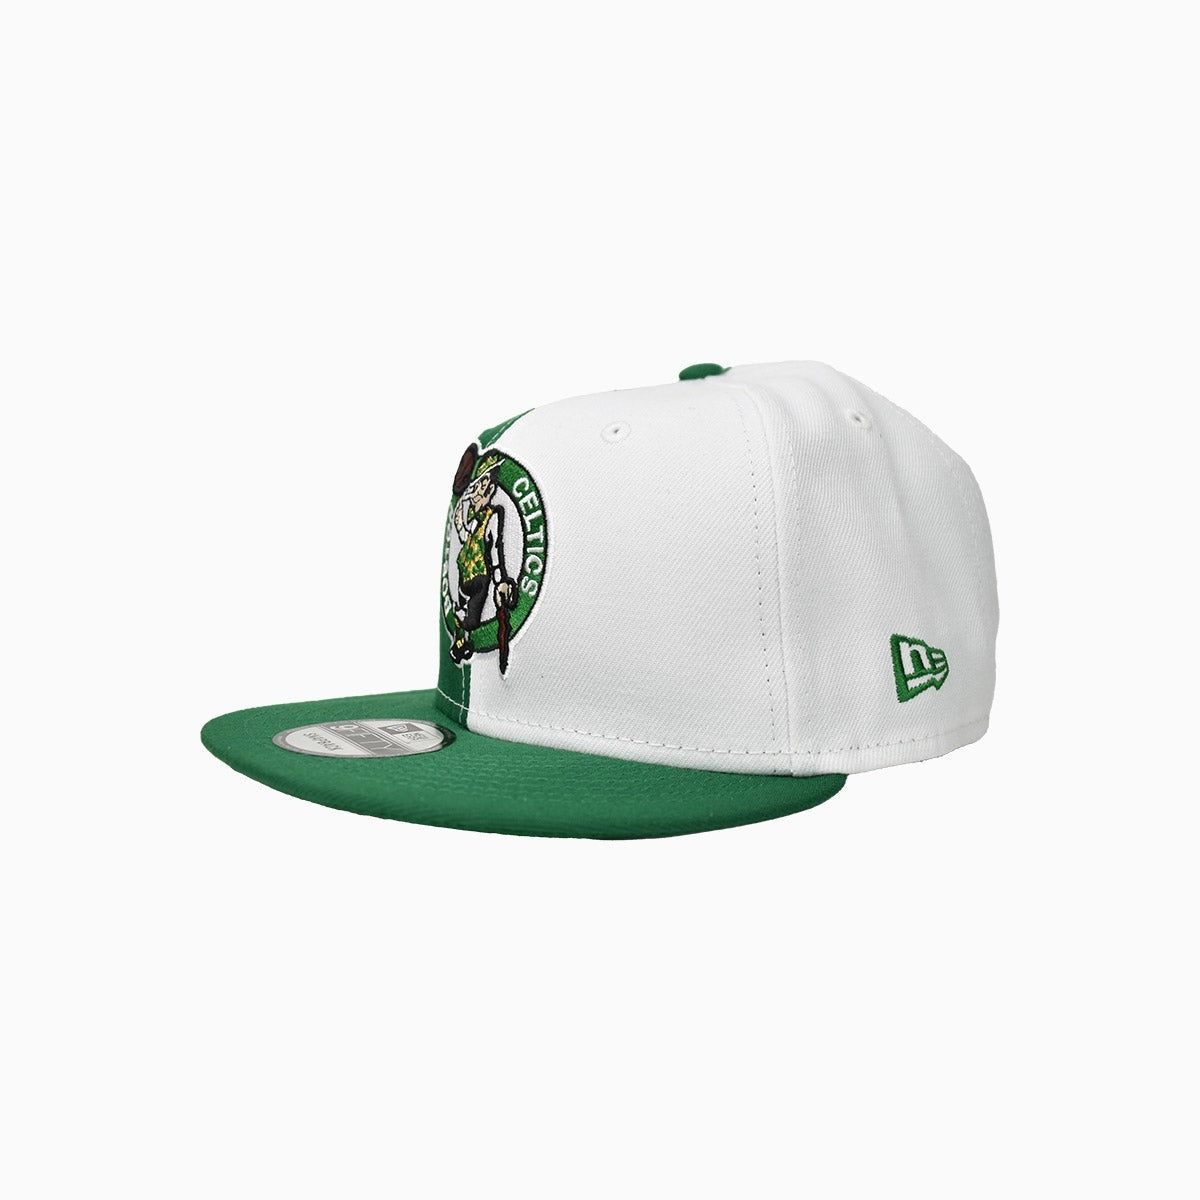 new-era-boston-celtics-17x-nba-champions-9fifty-snapback-hat-70643160